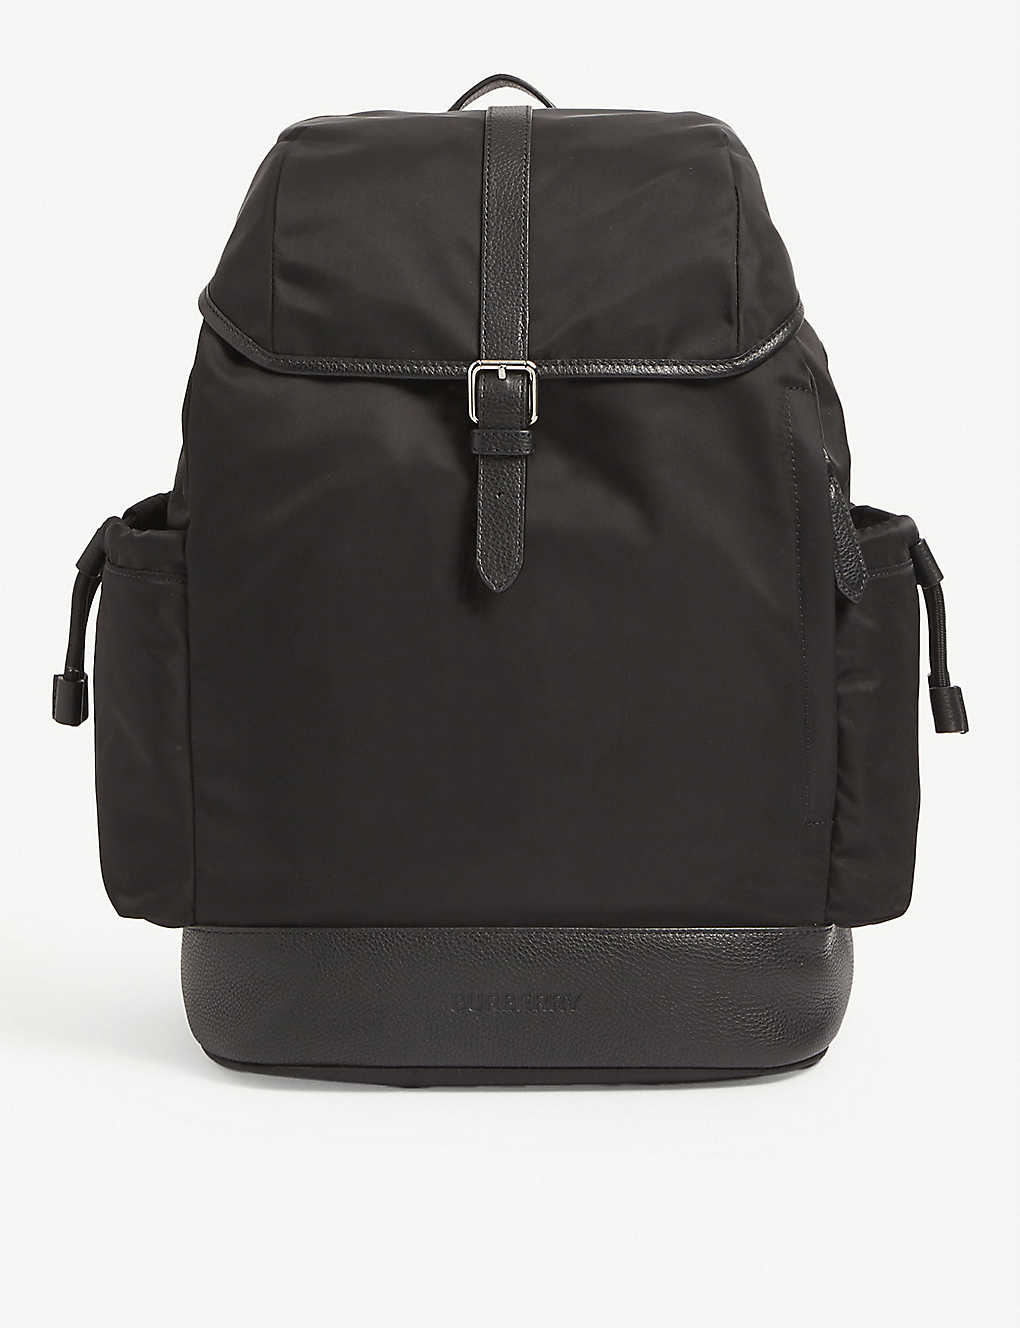 Kids Watson nylon changing bag Selfridges & Co Boys Accessories Bags Rucksacks 